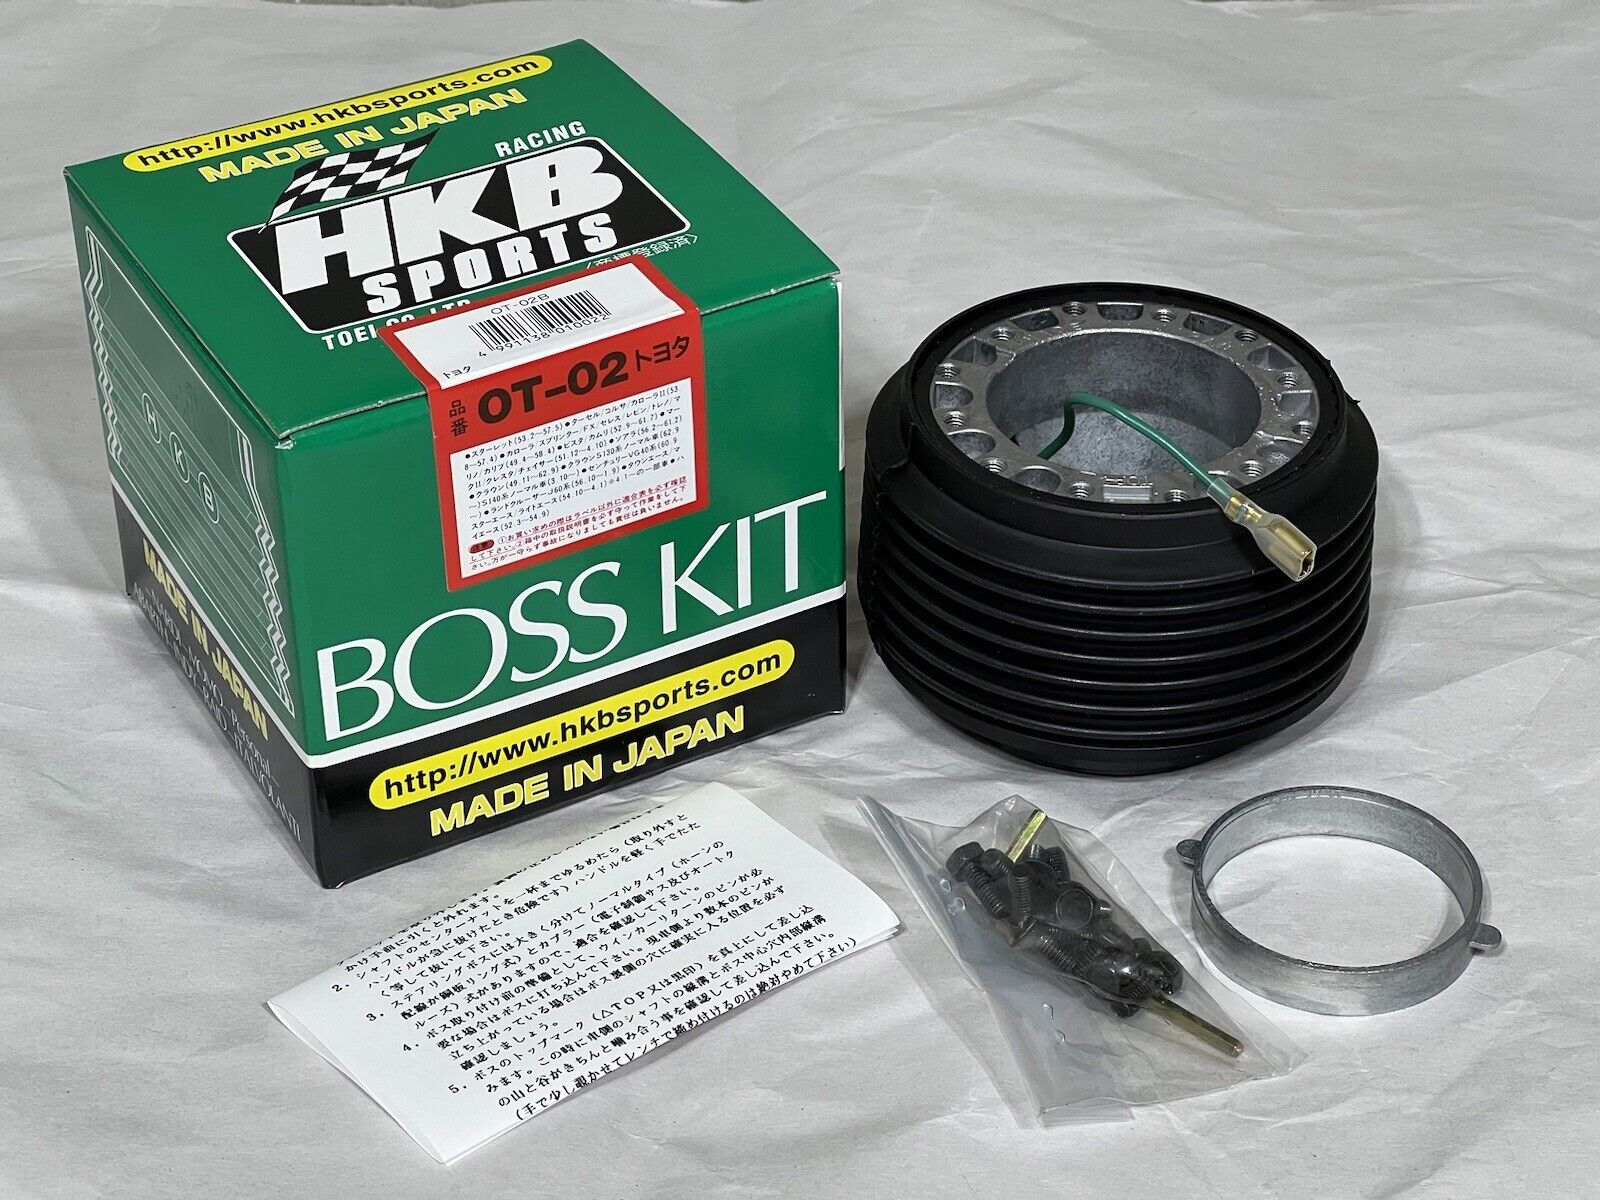 HKB SPORTS Steering Wheel Adapter Kit Boss Kit for 1993+ Toyota Dyna U90 Series